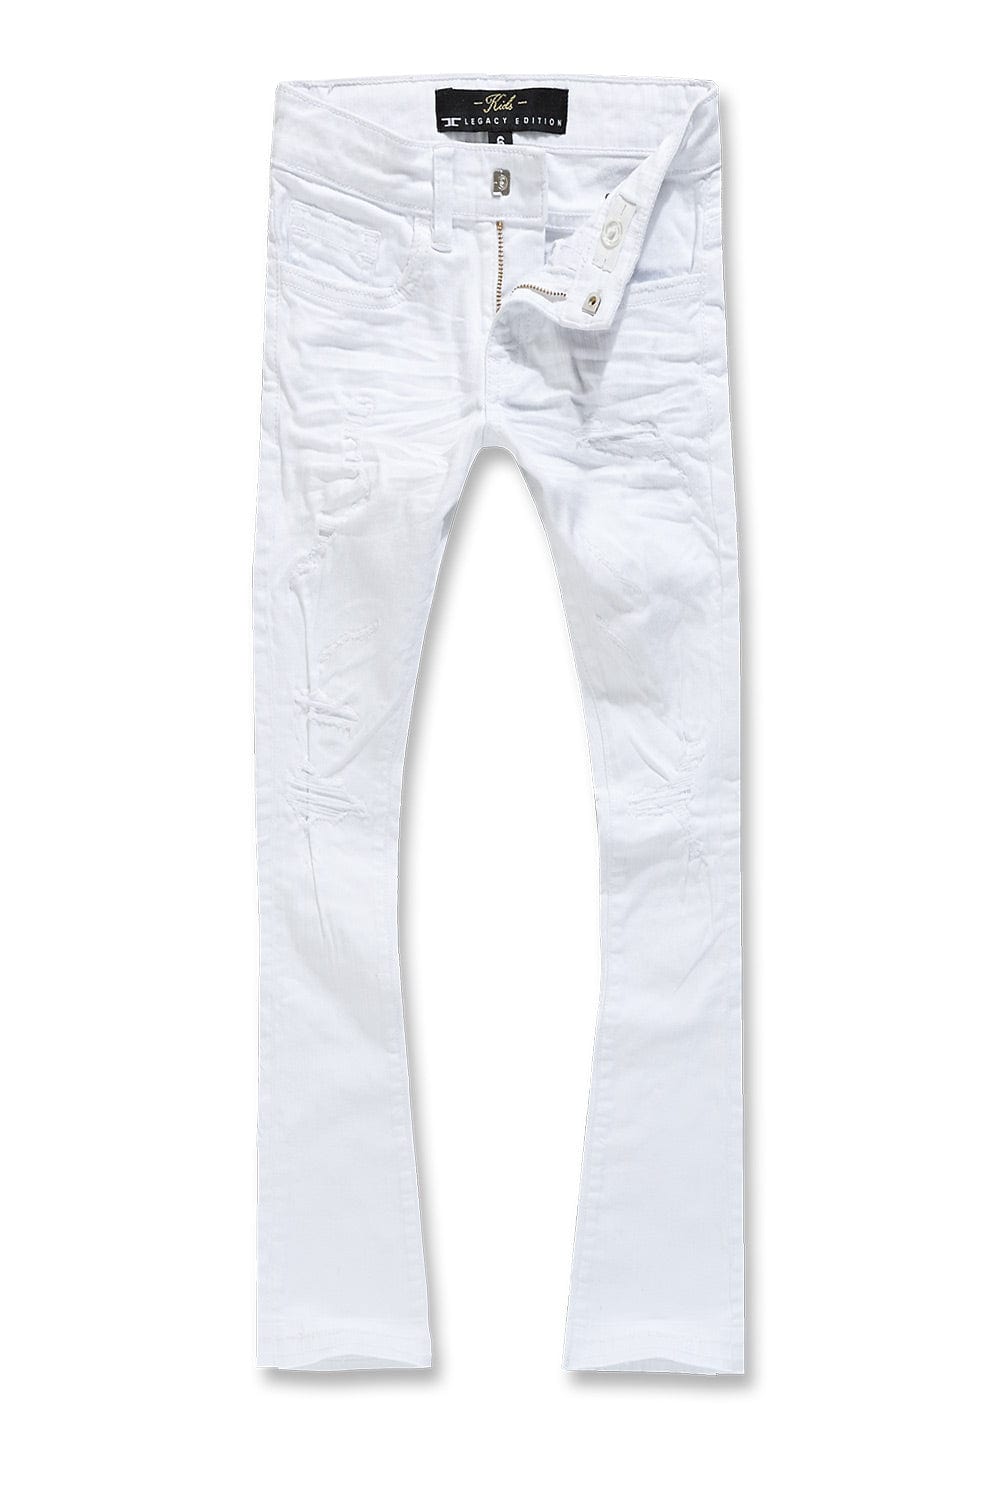 JC Kids Kids Stacked Tribeca Twill Pants (White) 2 / White